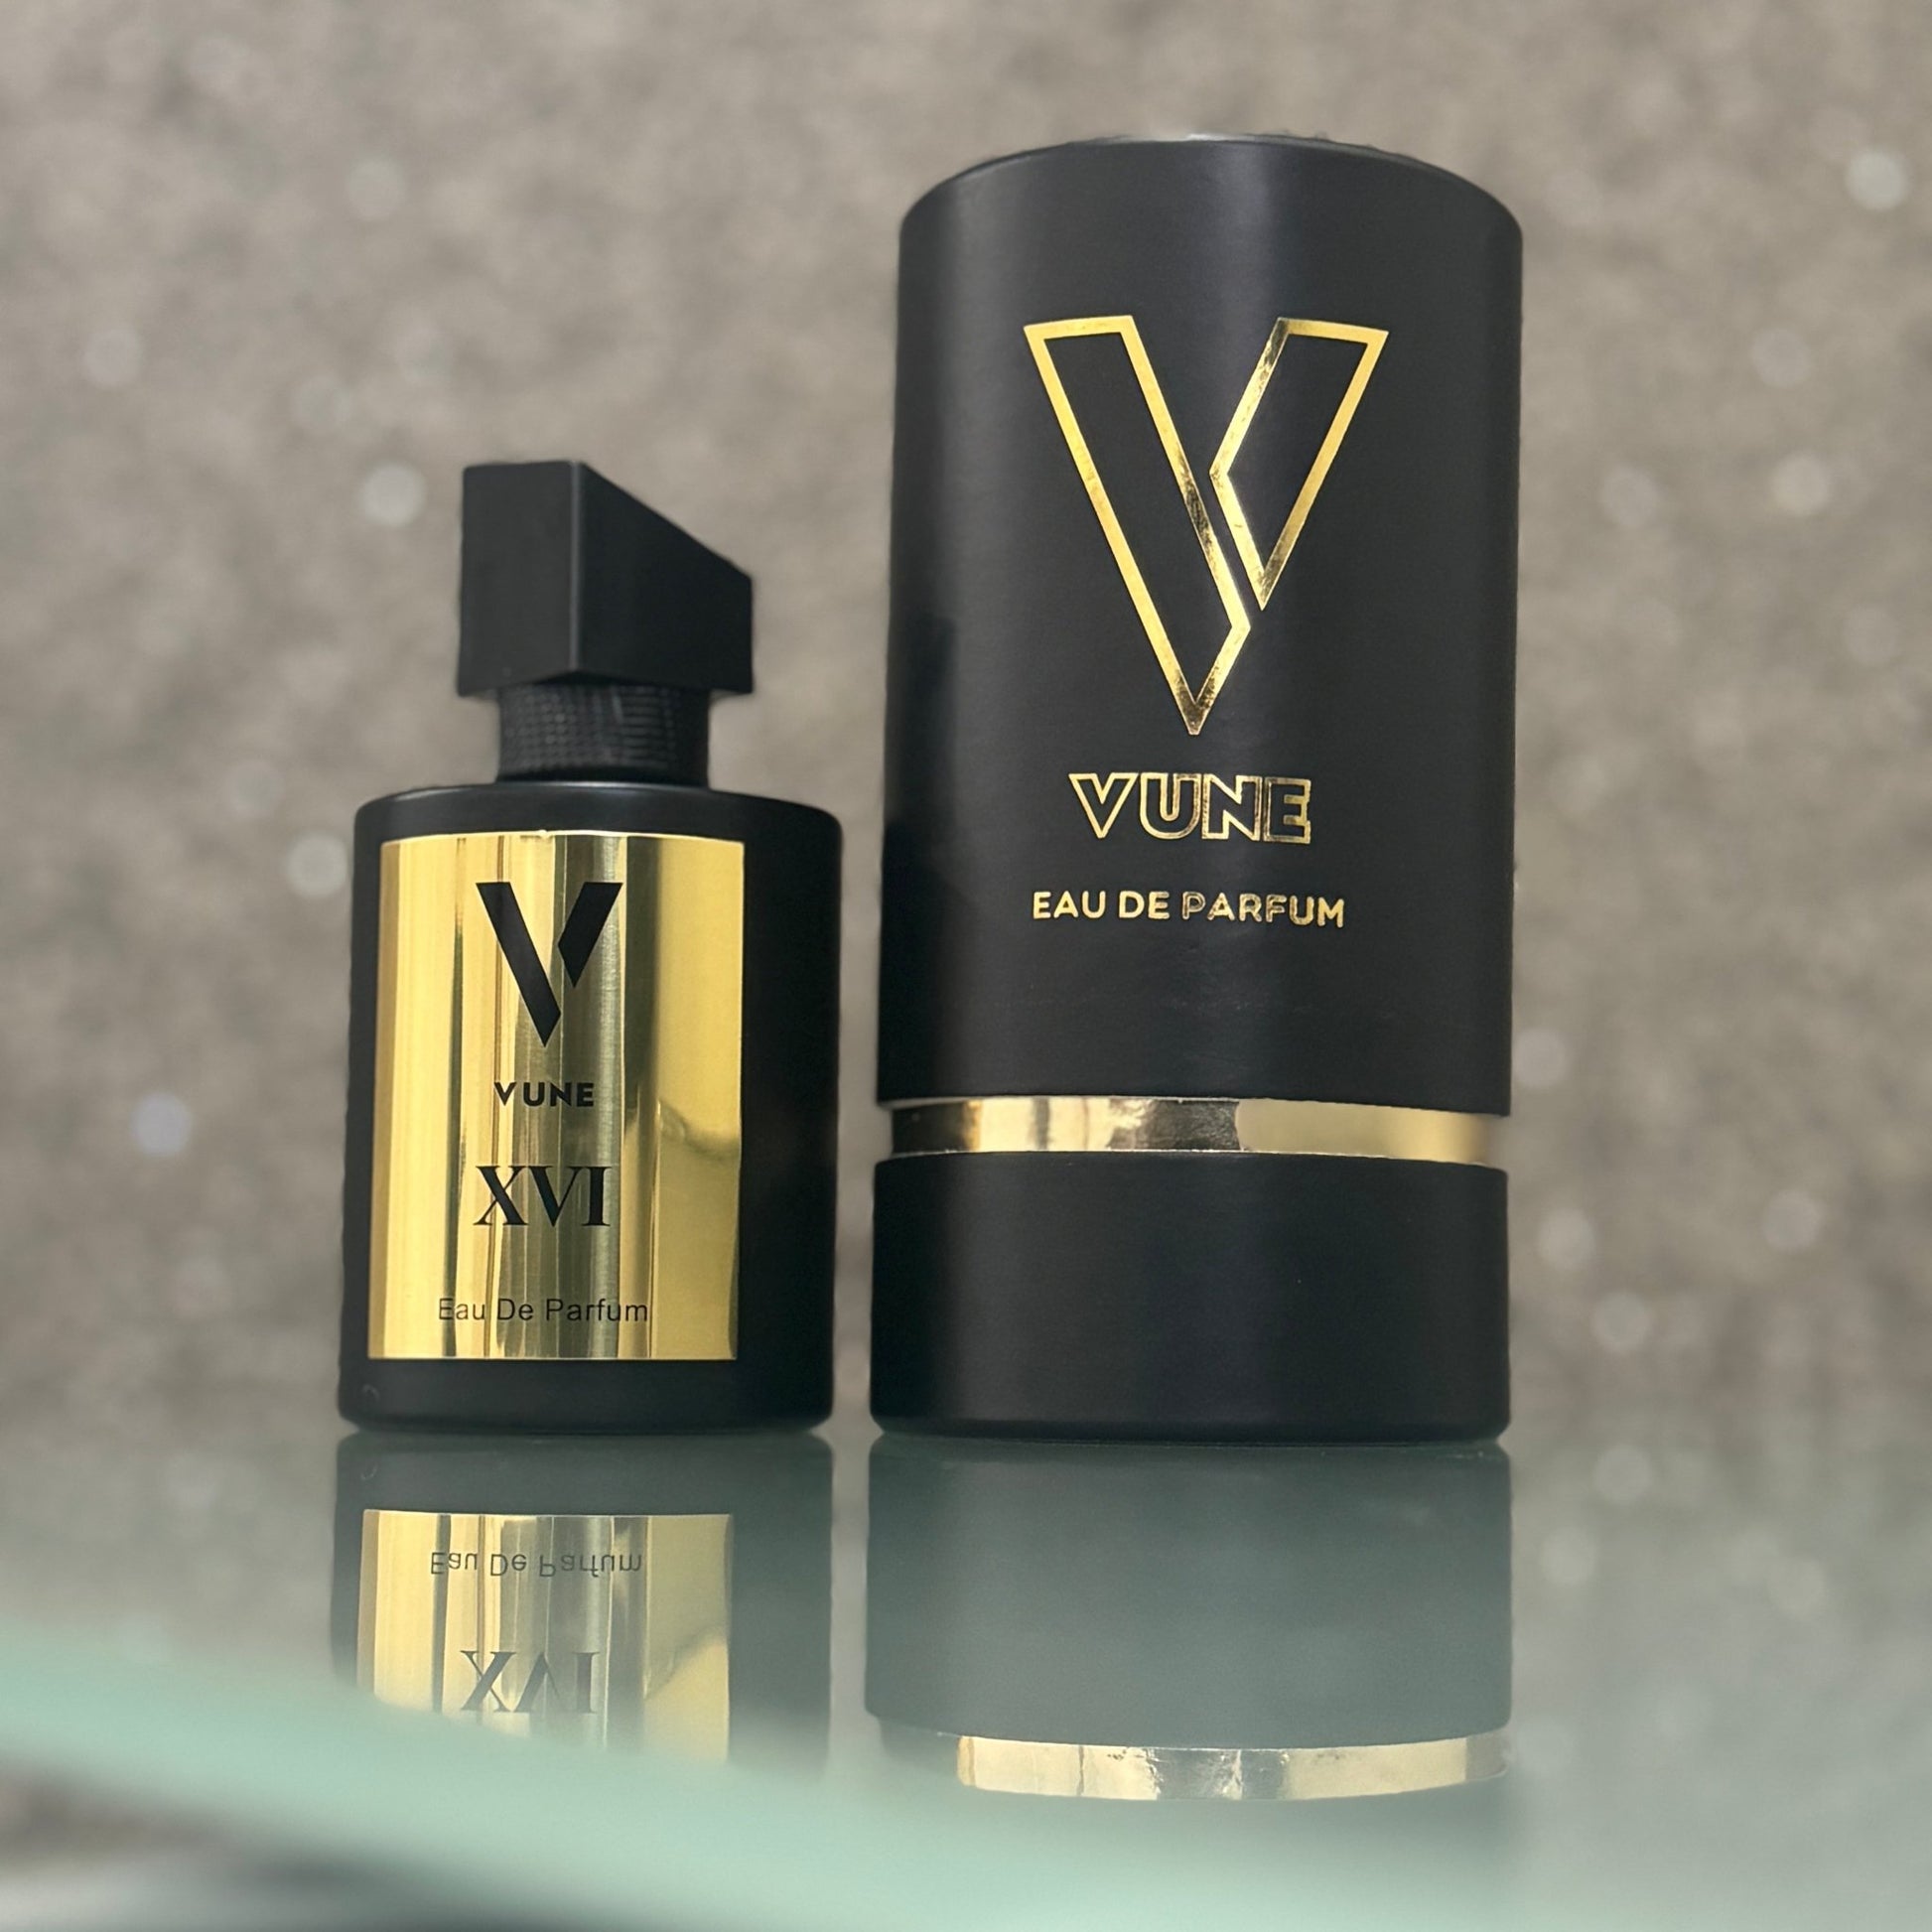 XVII 50ml Eau De Parfum - Vune Essence